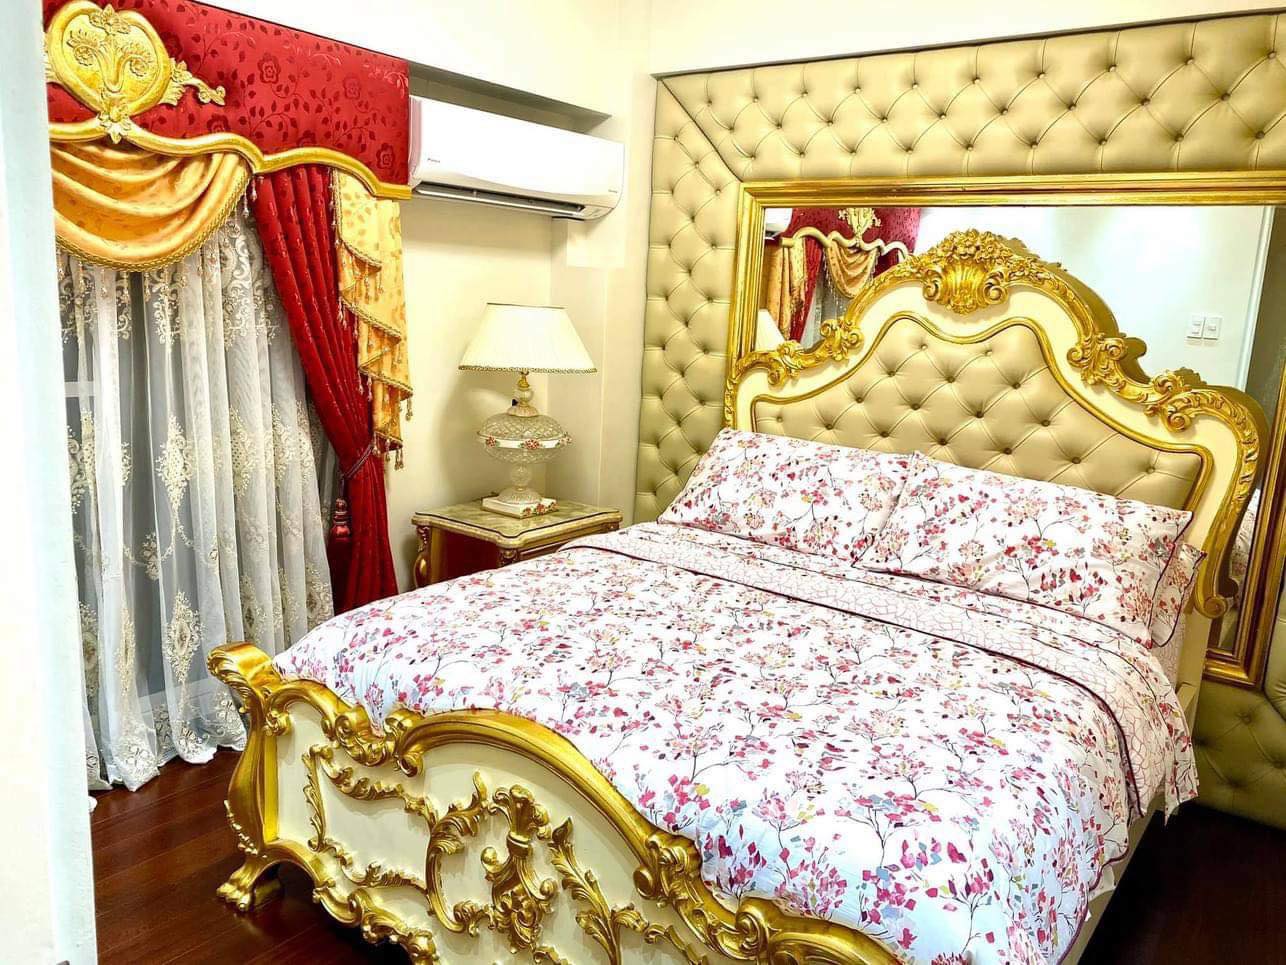 Enchanting2-BedroomCondoUnitforSaleinSheridanTowers,Pasig City-9.jpg